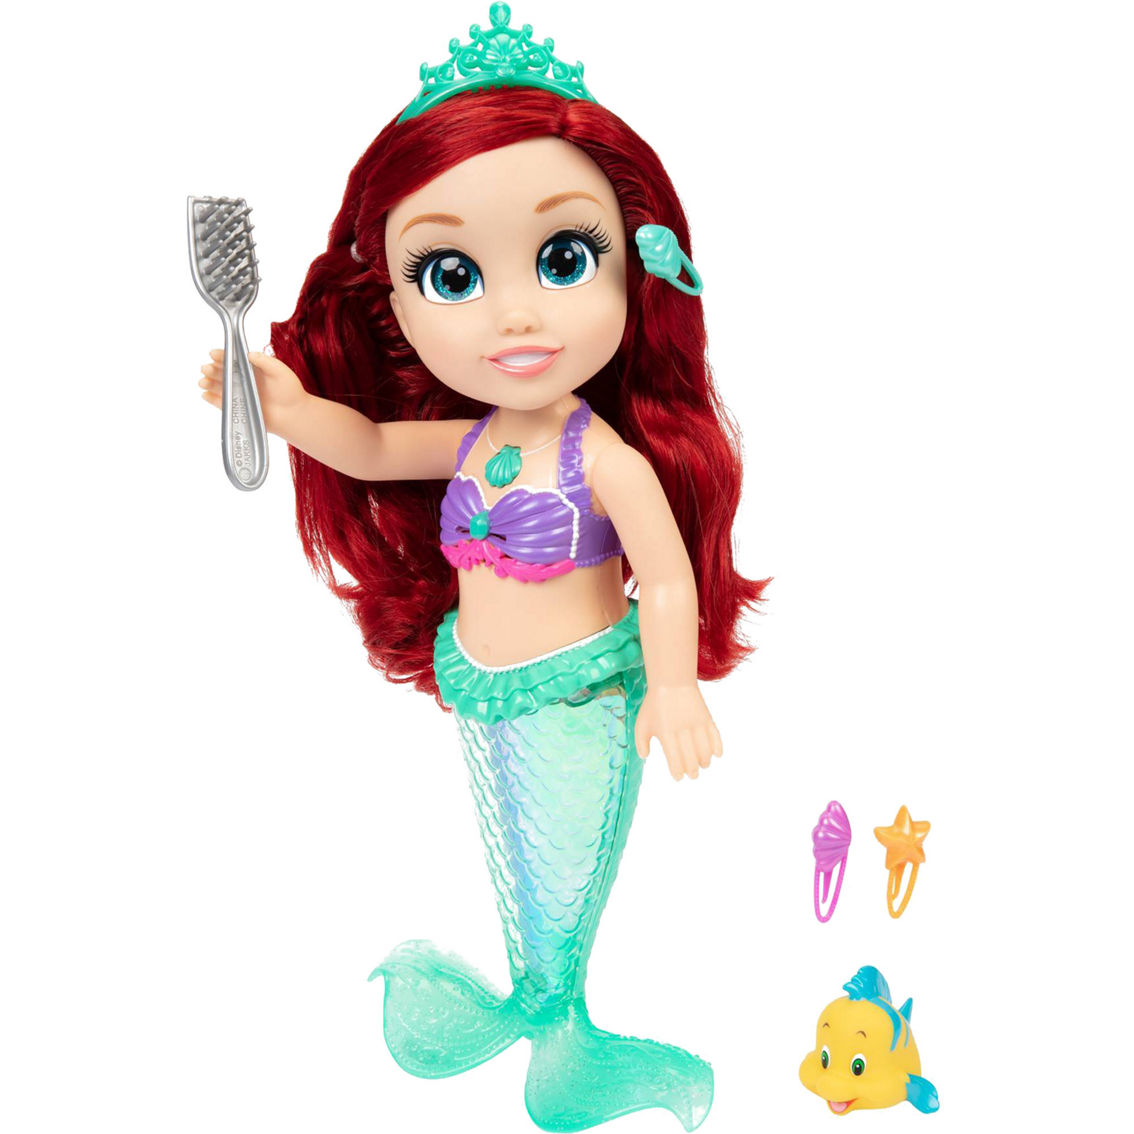 Disney Princess Ariel Singing Doll - Image 2 of 2